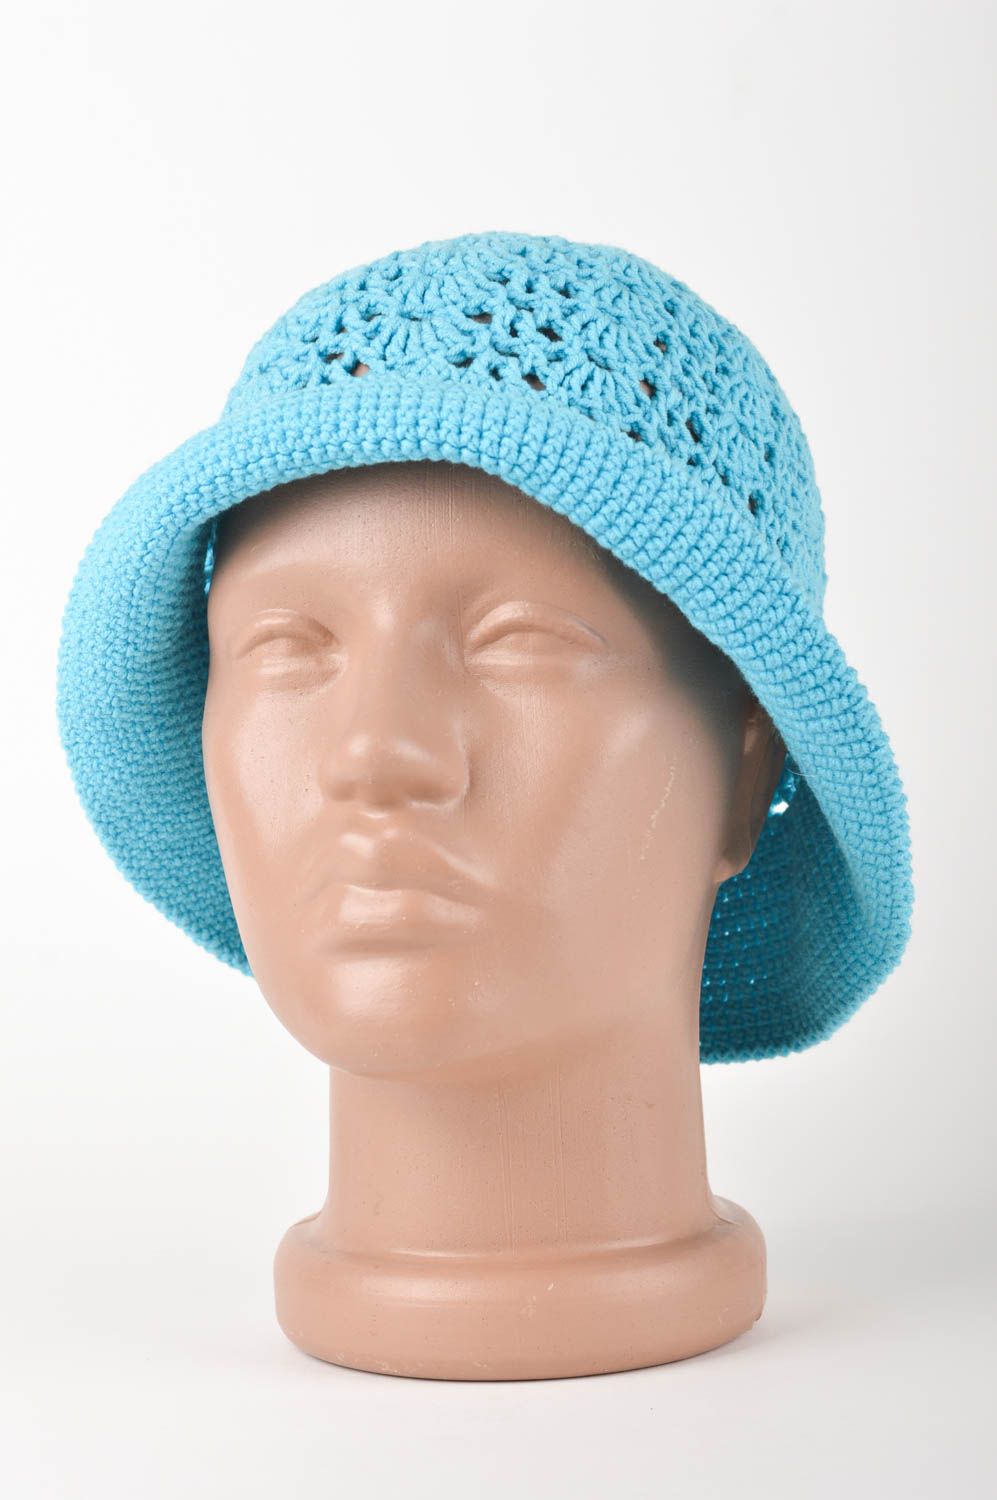 Beautiful handmade crochet hat fashion accessories for kids crochet ideas photo 1